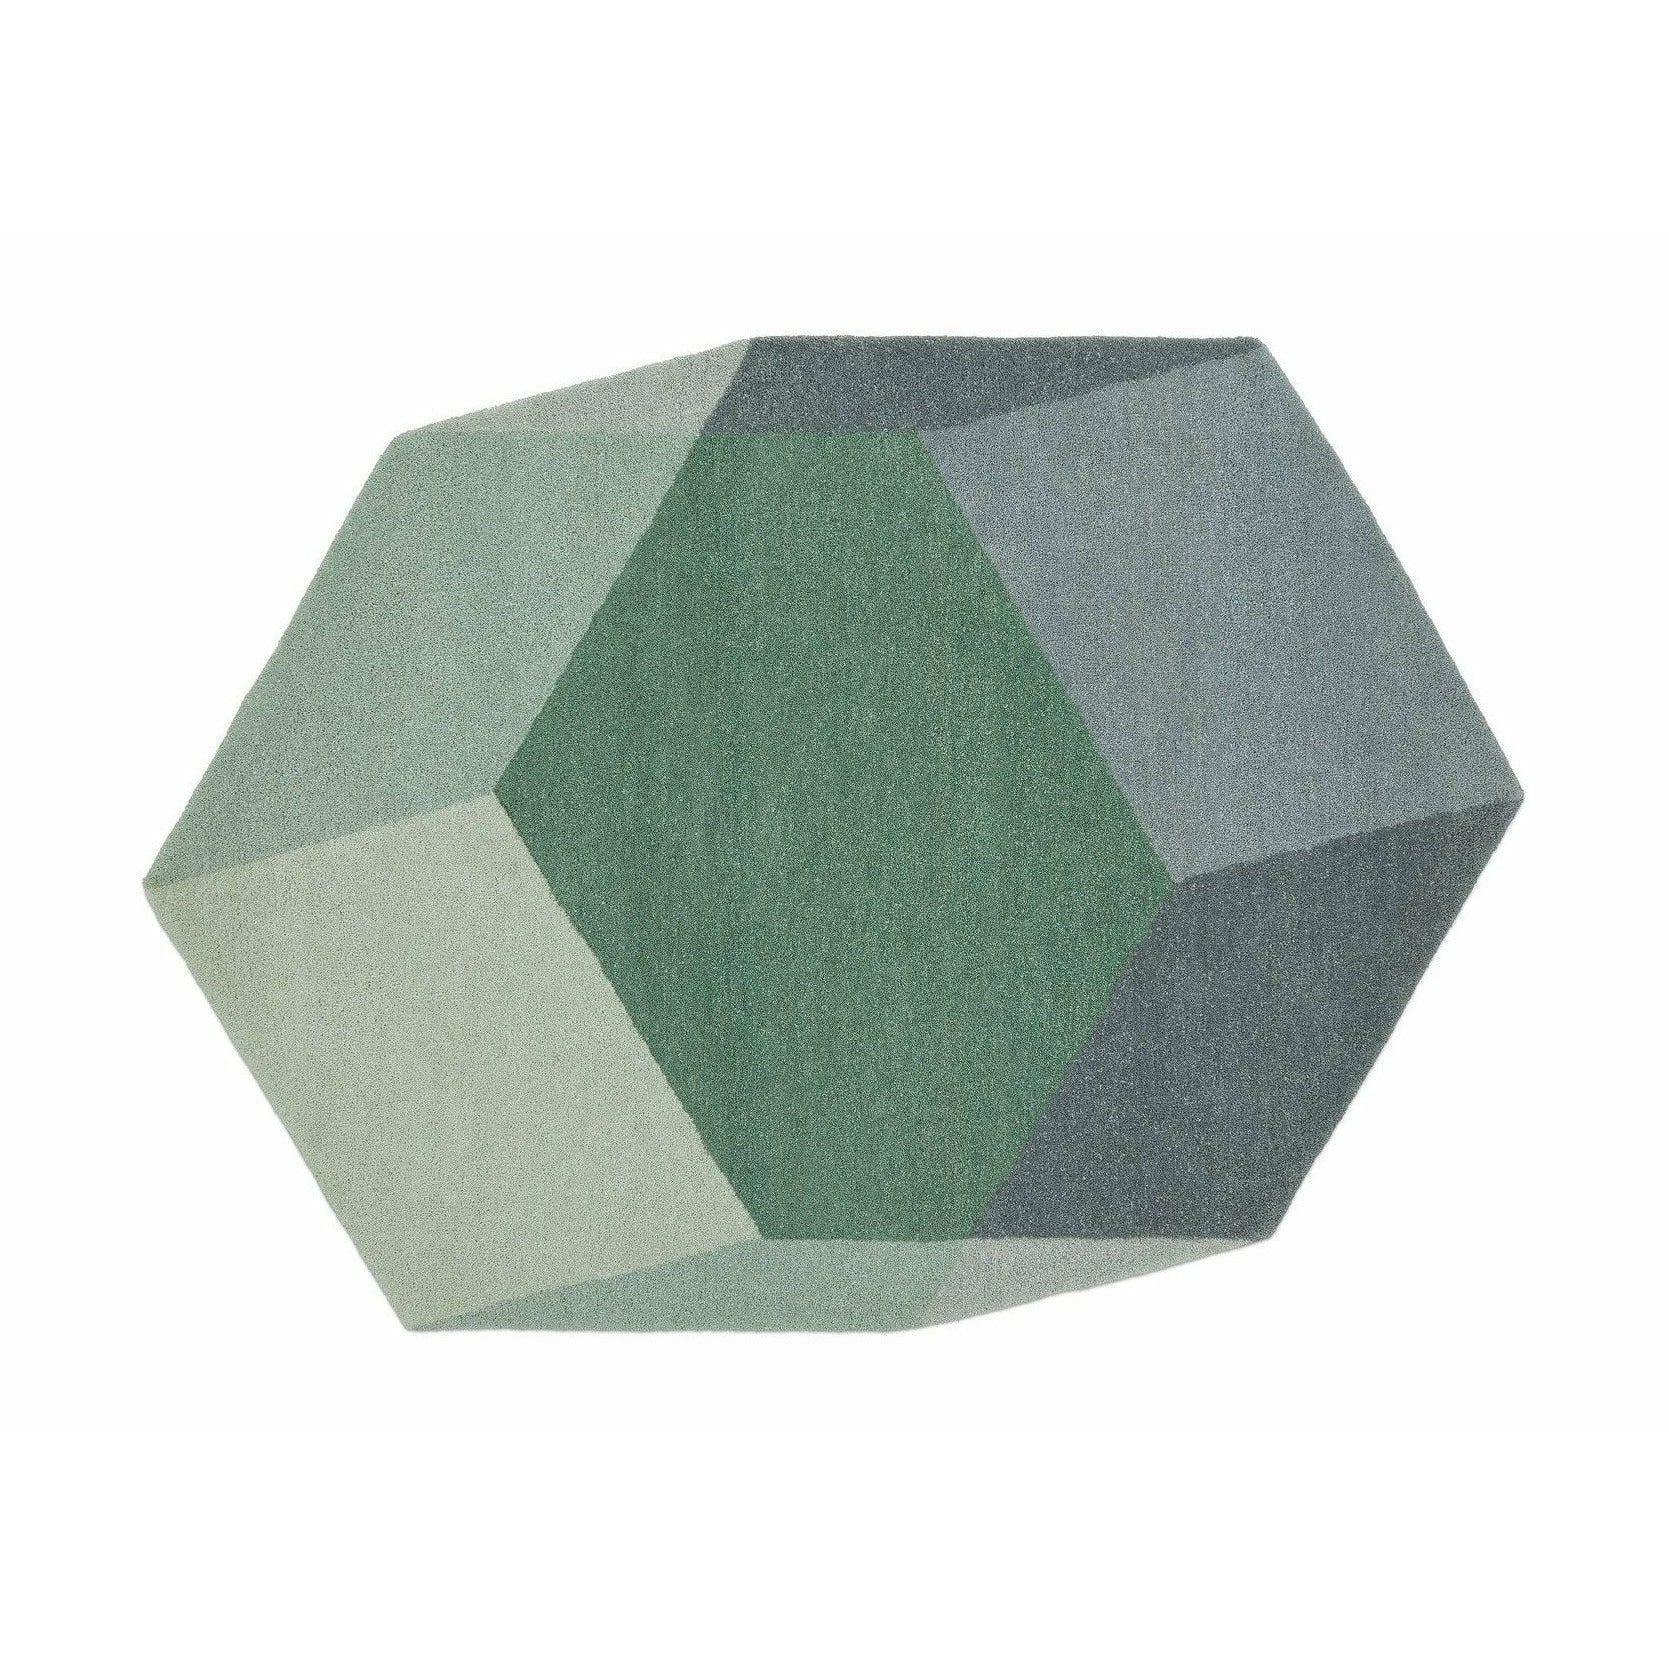 PUIK Iso matta hexagonal, grön